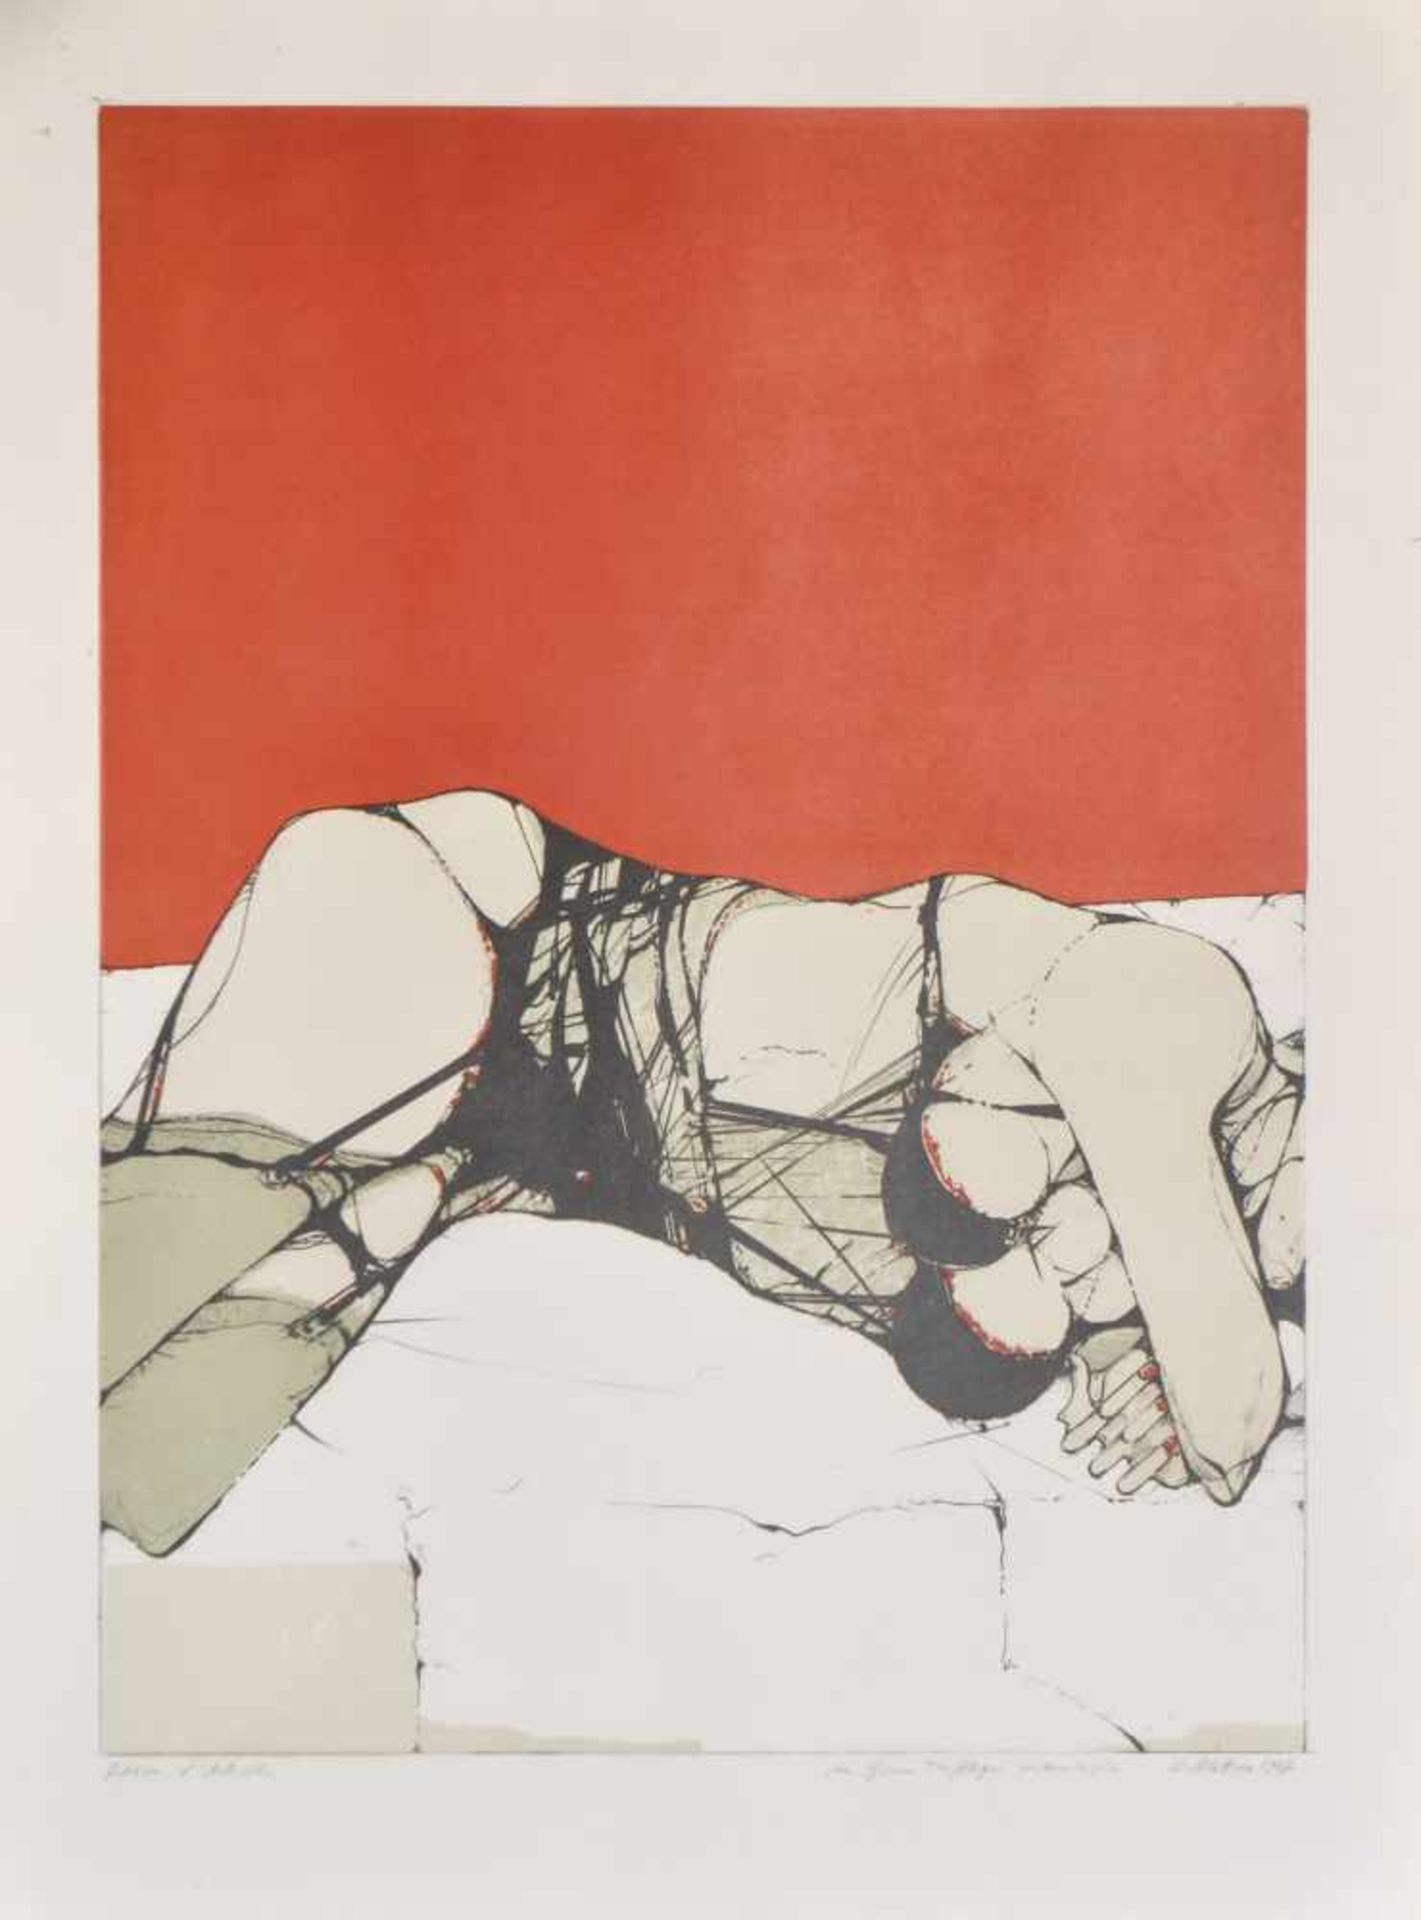 Karl Plattner (Mals/Malles 1919  Mailand/Milano 1986)Liegender Akt, 1968;Lithografie, 75 x 56 cm (